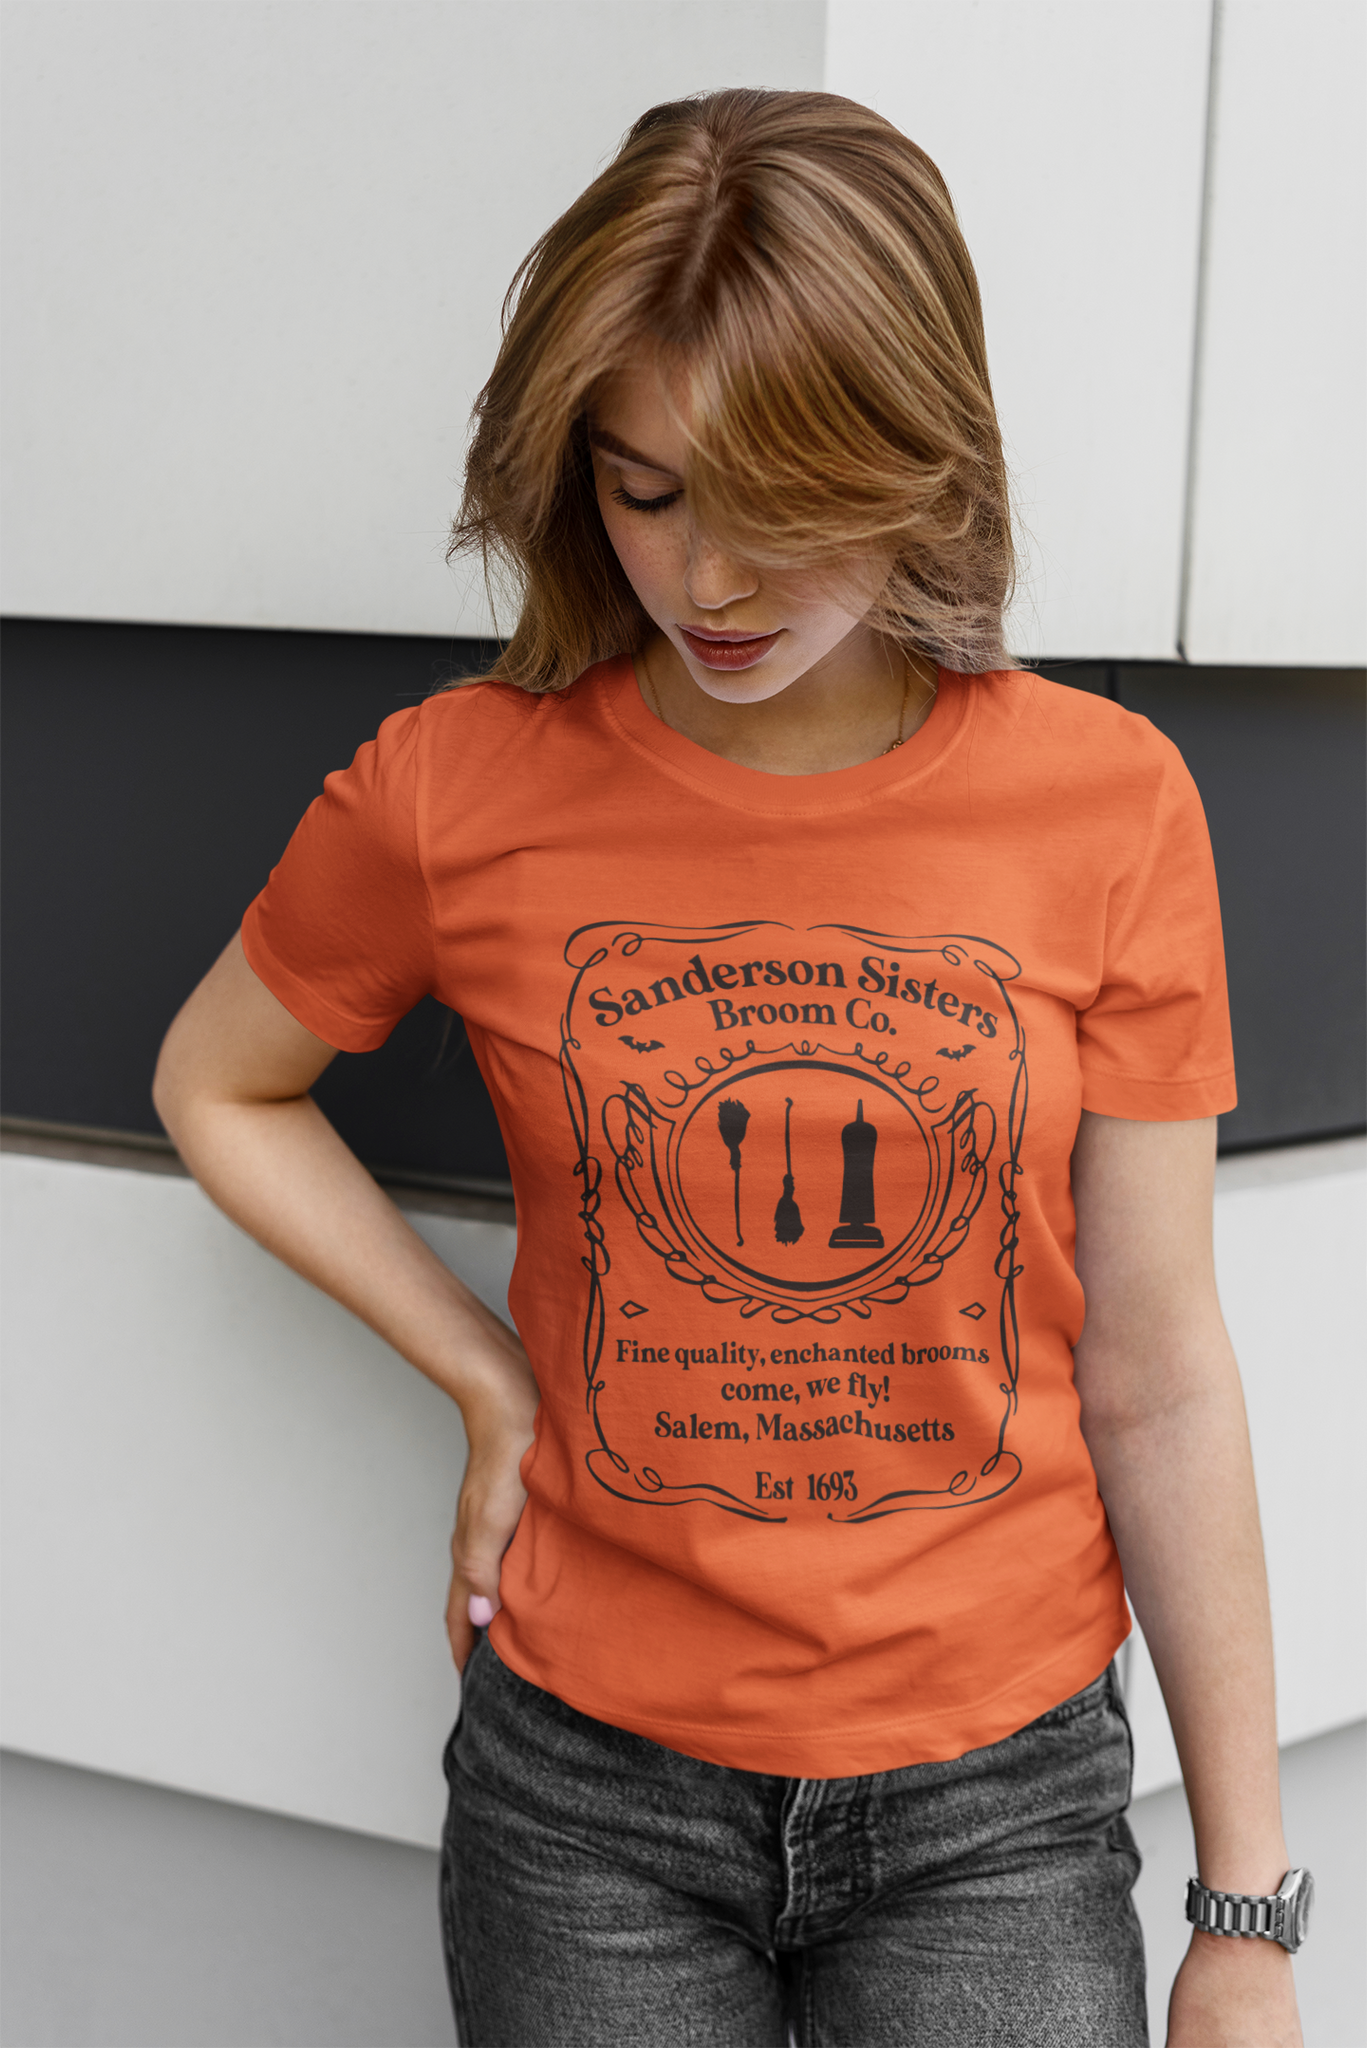 Hocus Pocus T Shirt, Sanderson Sisters Broom Co Shirt, Broom Mop Vacuum Tshirt, Halloween Gifts